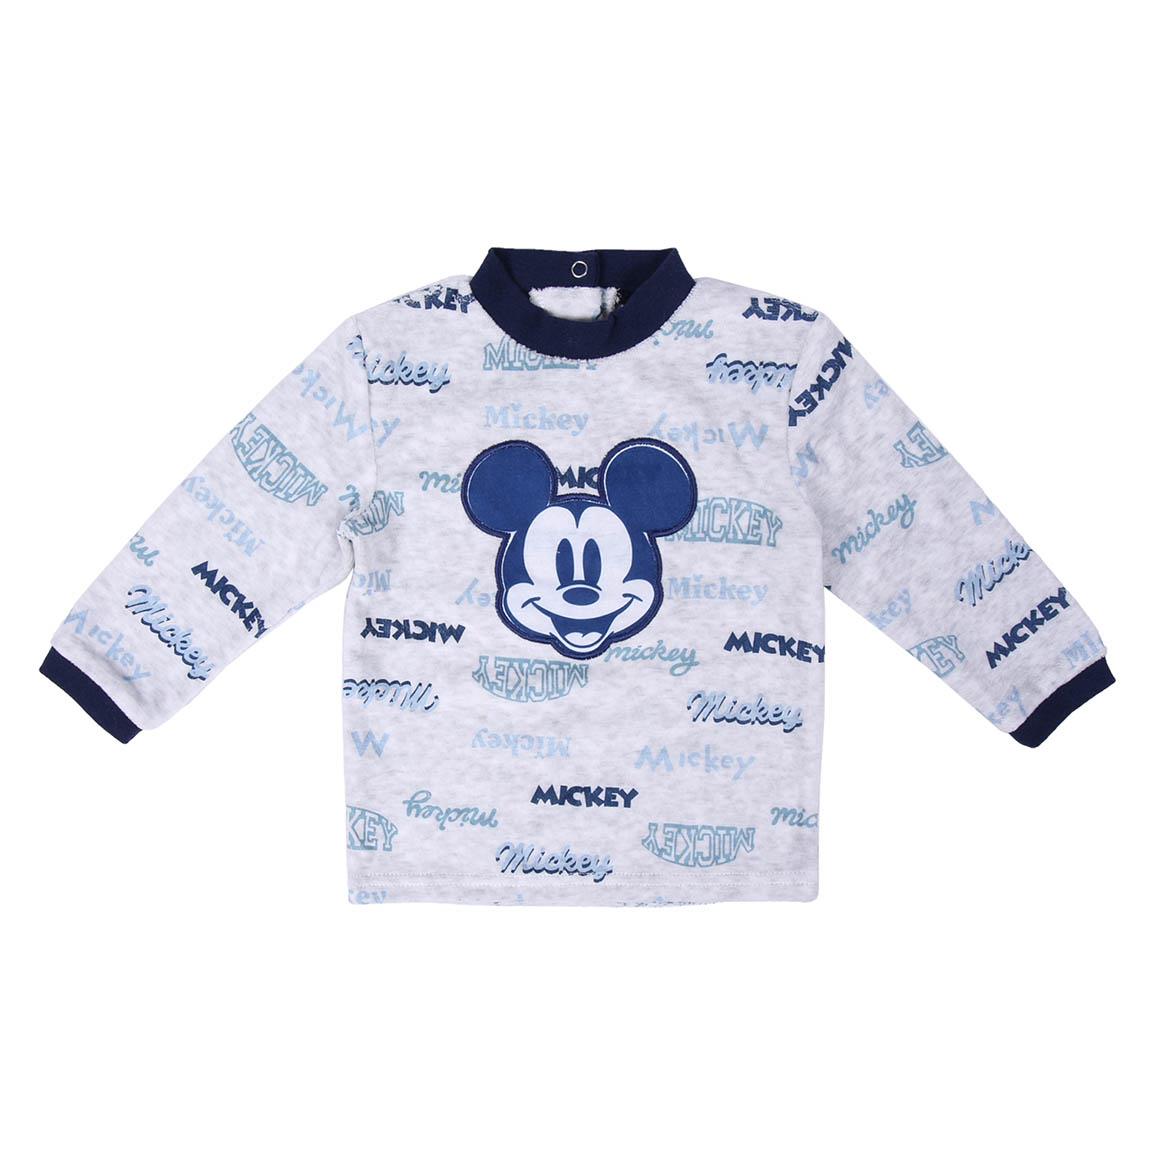 Pijama Largo Velour Cotton 2pzs “Mickey Mouse”Cerdá